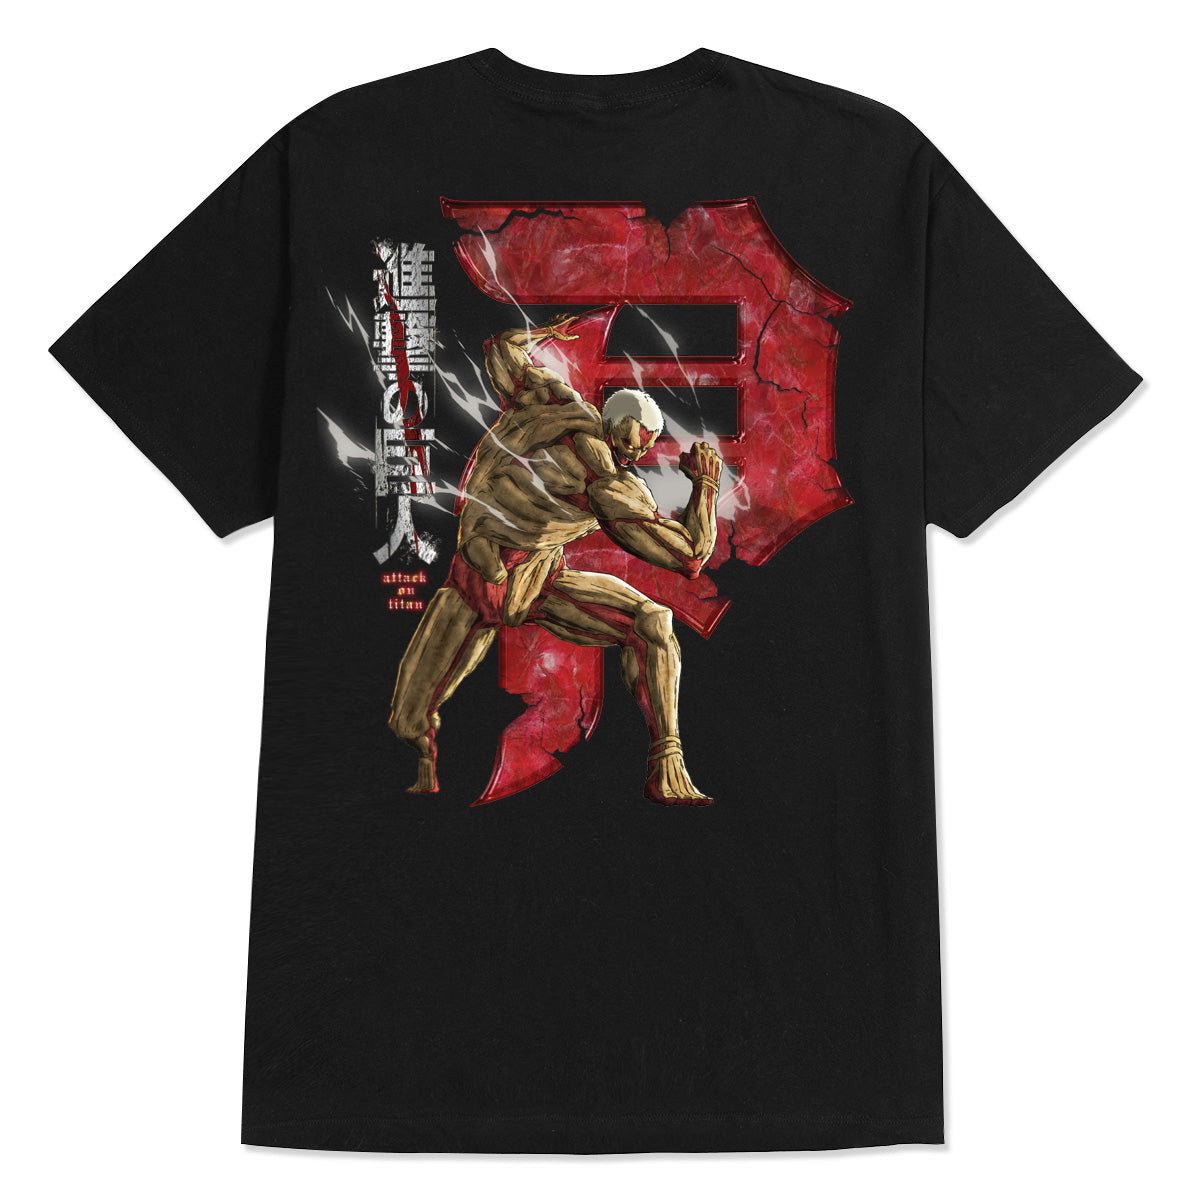 Primitive x Titans Armored Dirty P T-Shirt - Black image 1